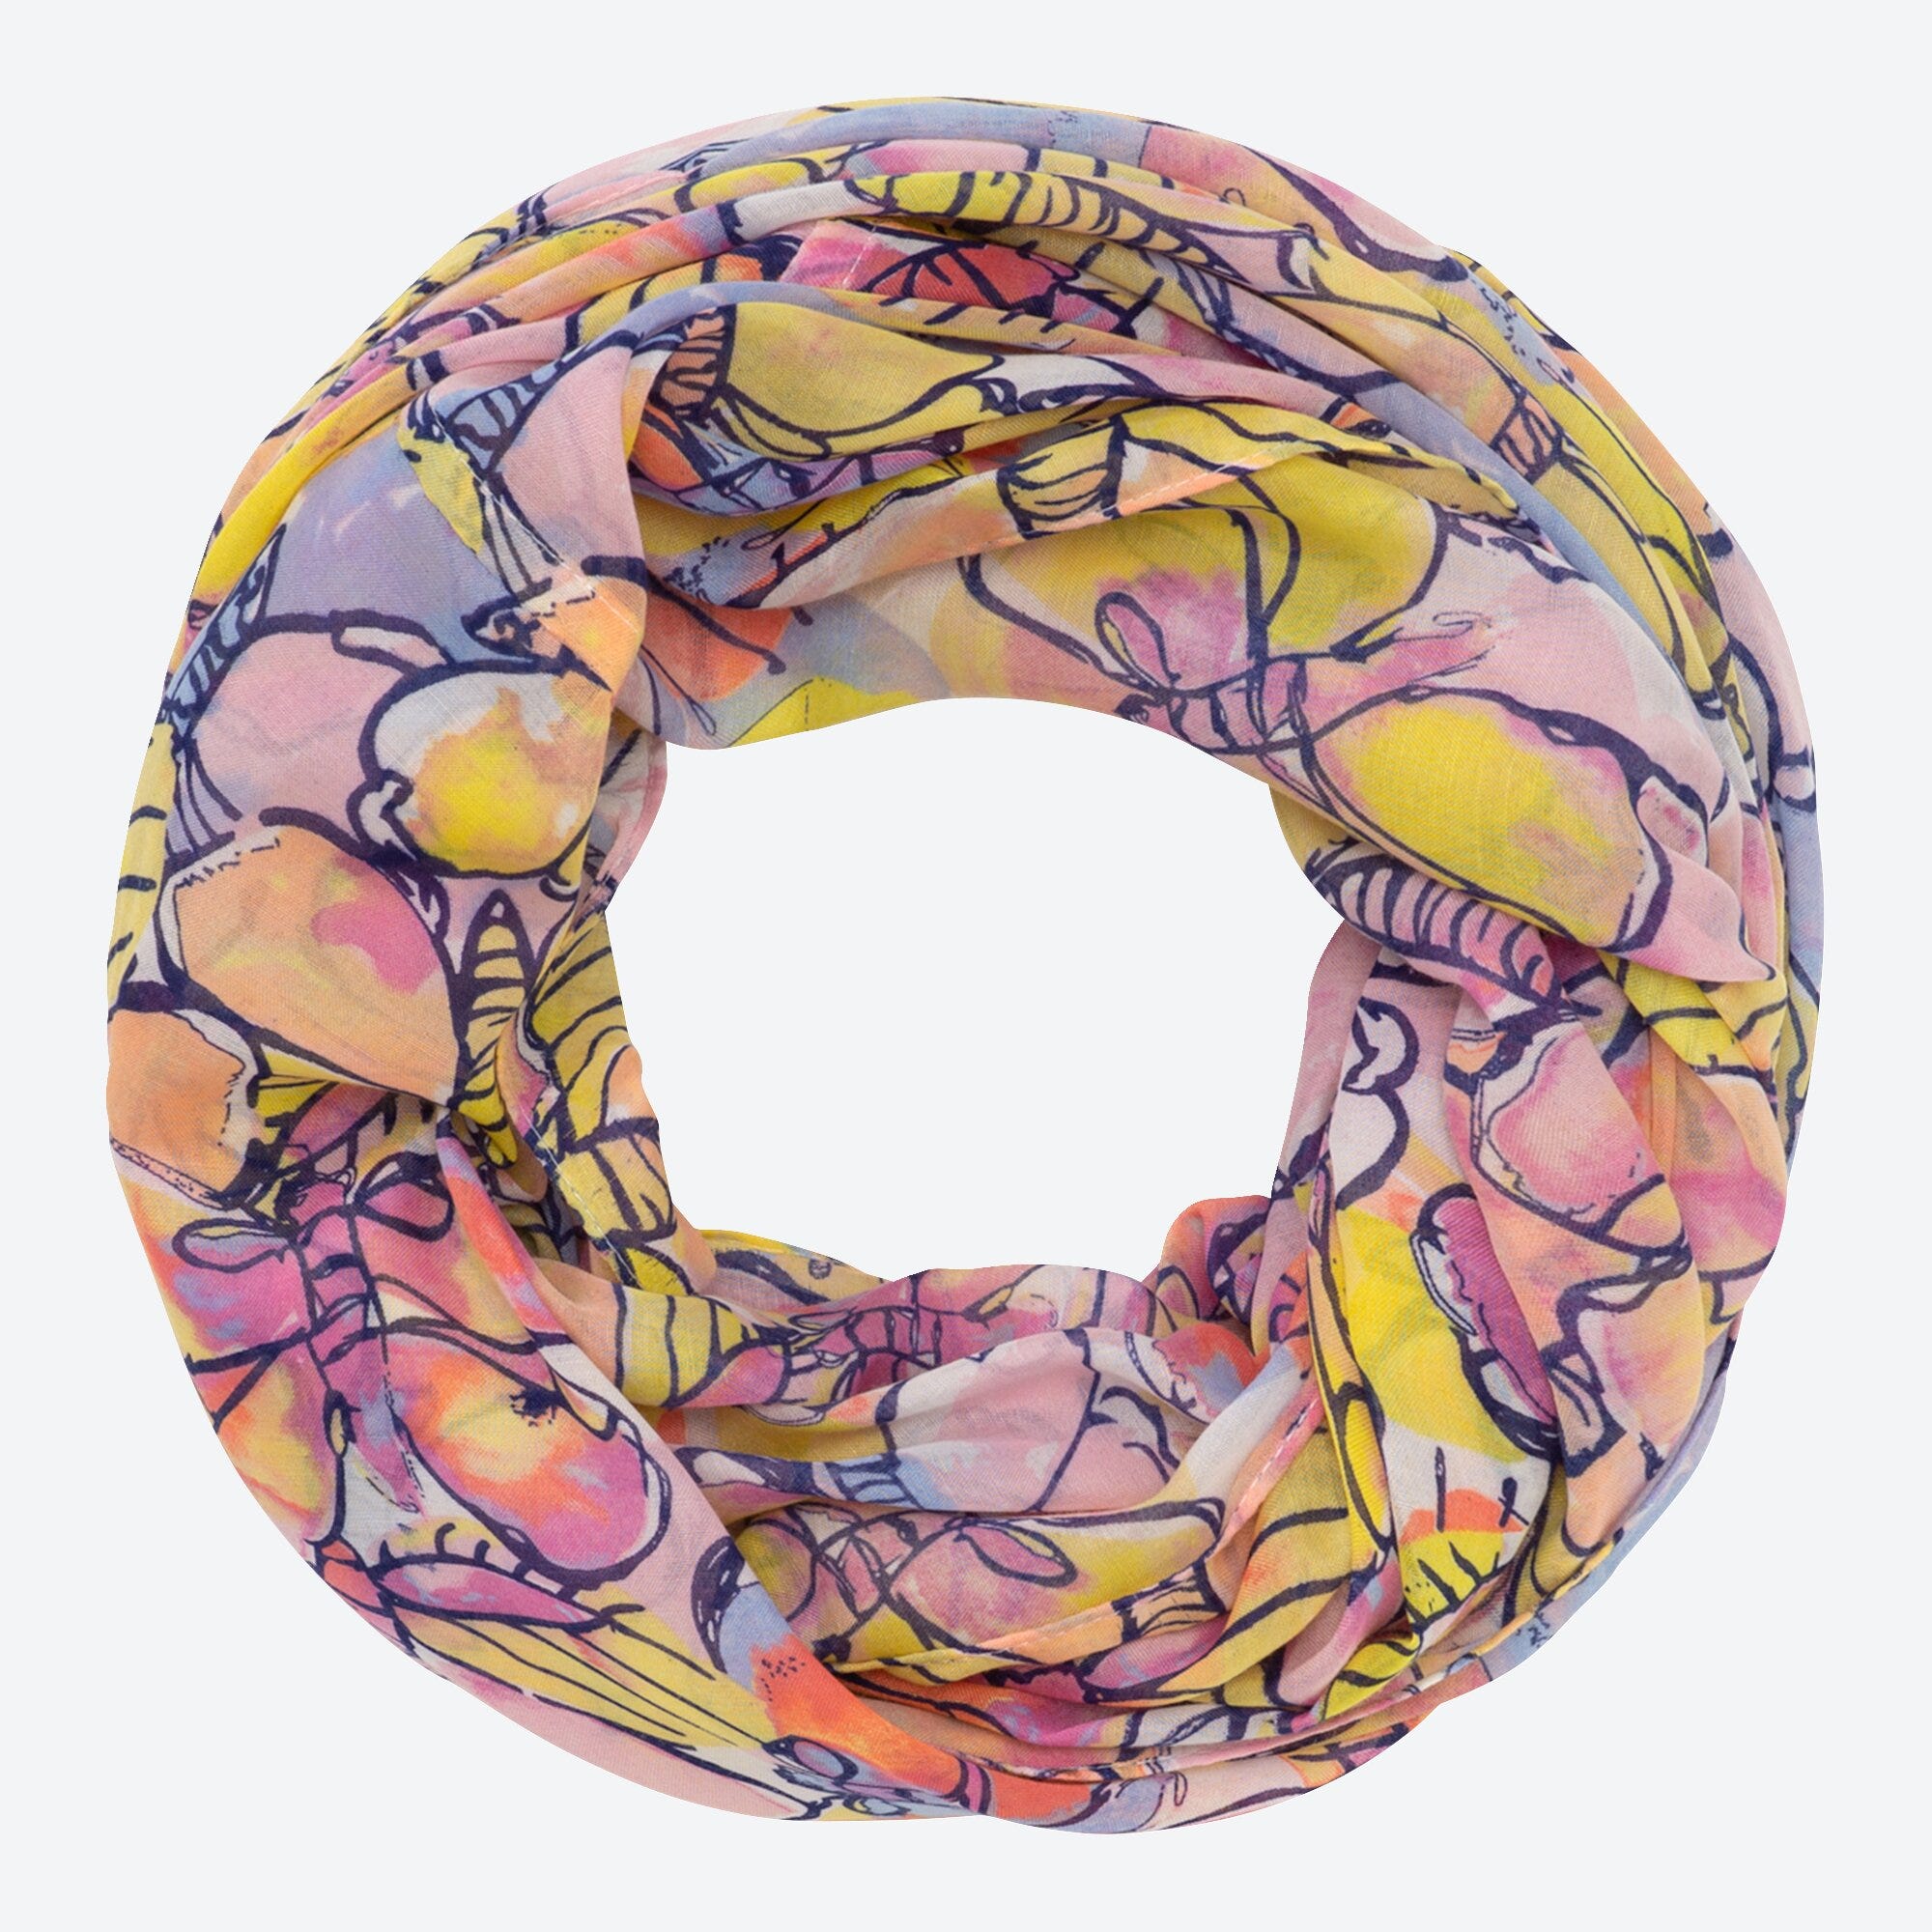 Damen-Loop-Schal mit tollem Muster